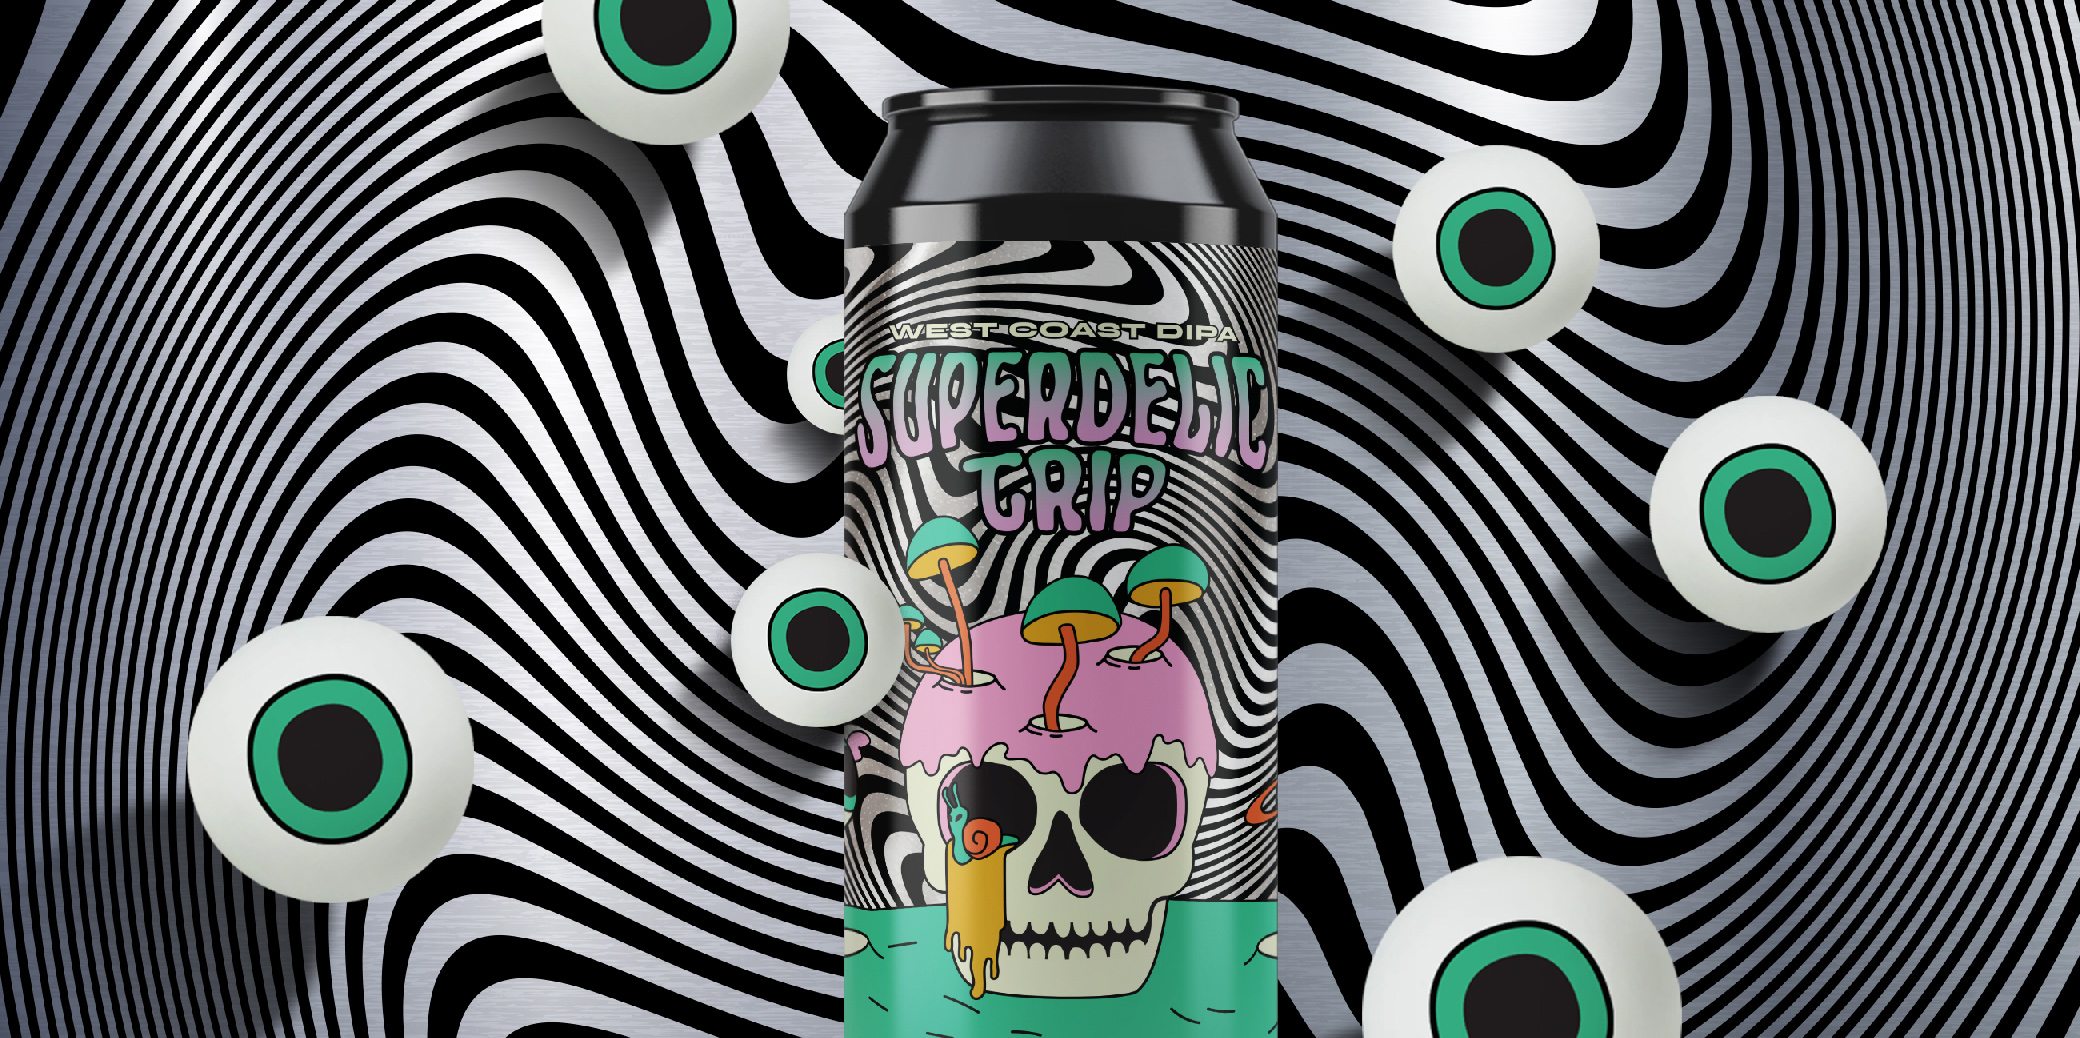 Polkadot’s Creative Packaging Design for Strange Brew’s Psychedelic Label